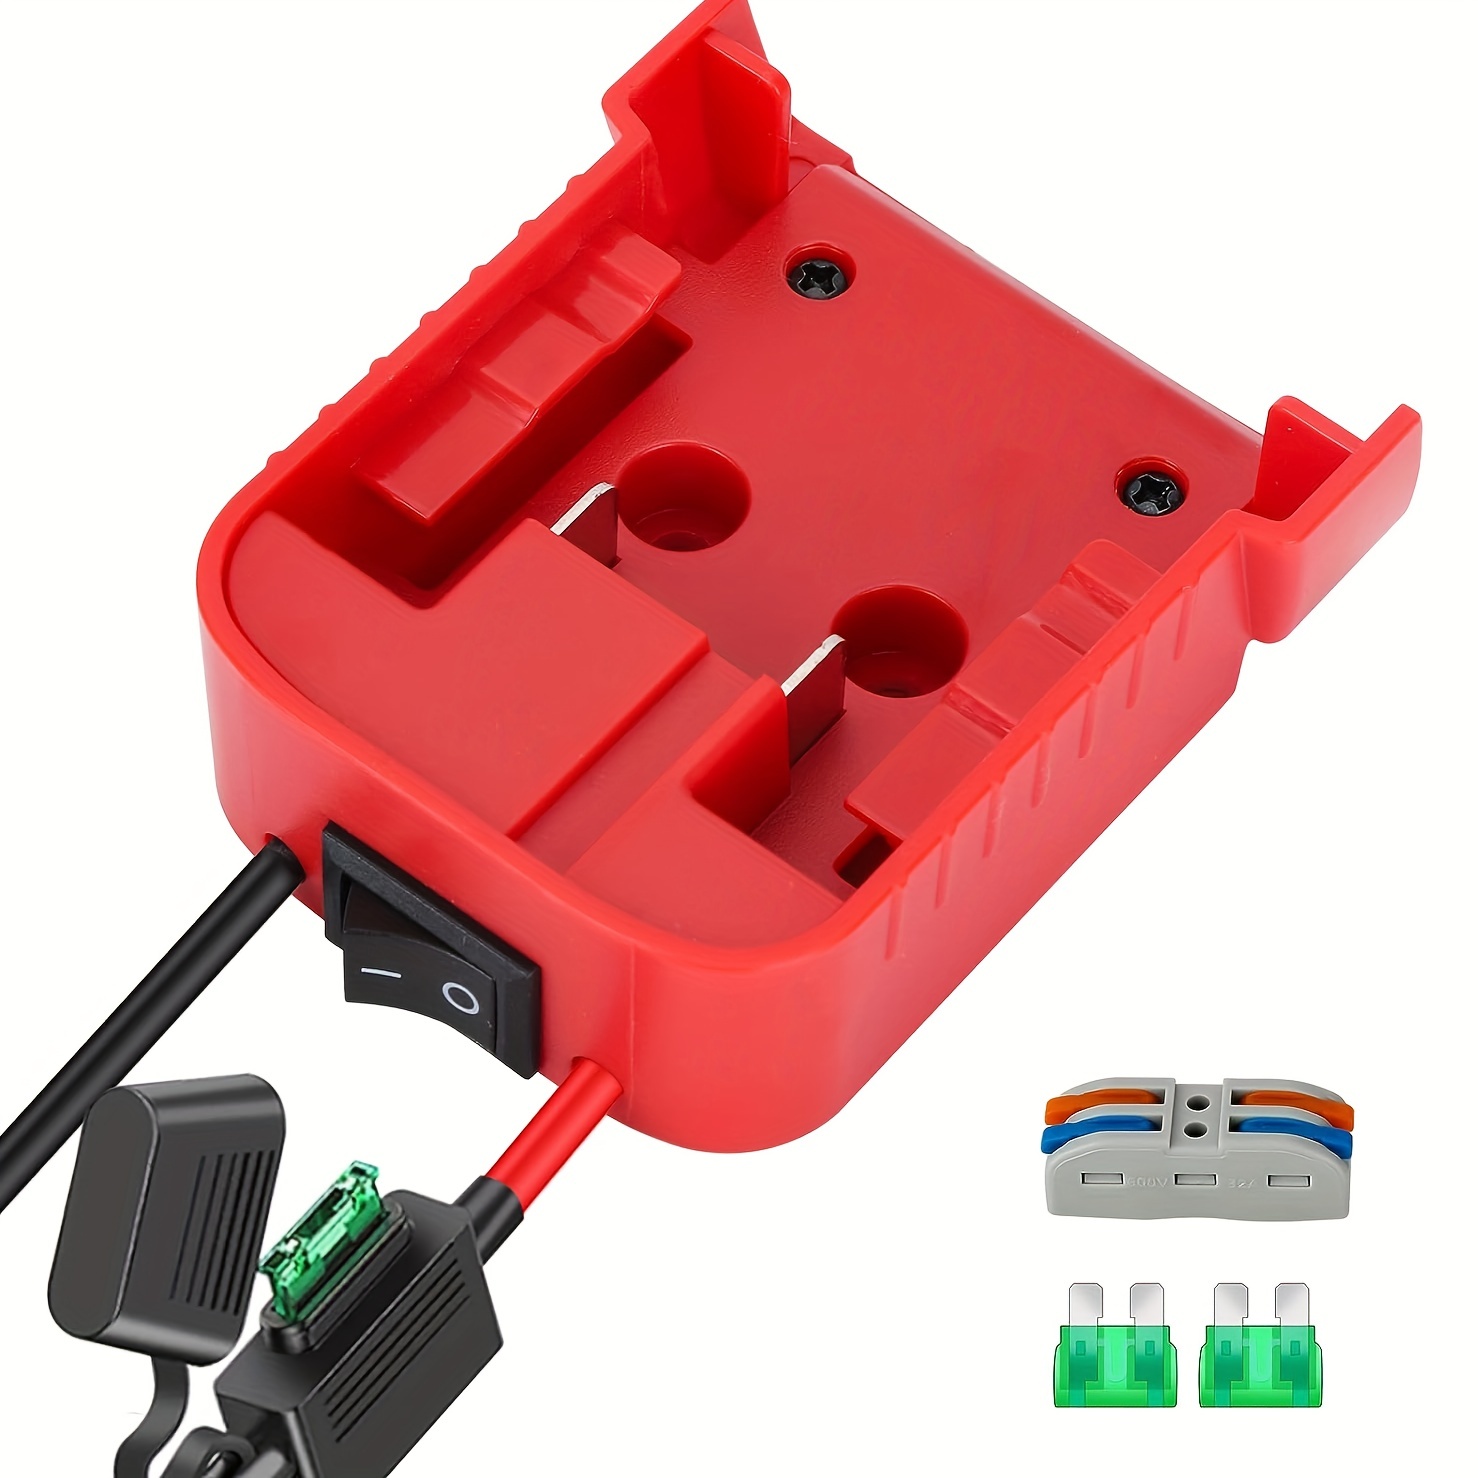 battery adapter for black and decker 20v dock power connector 12 gauge  robotics